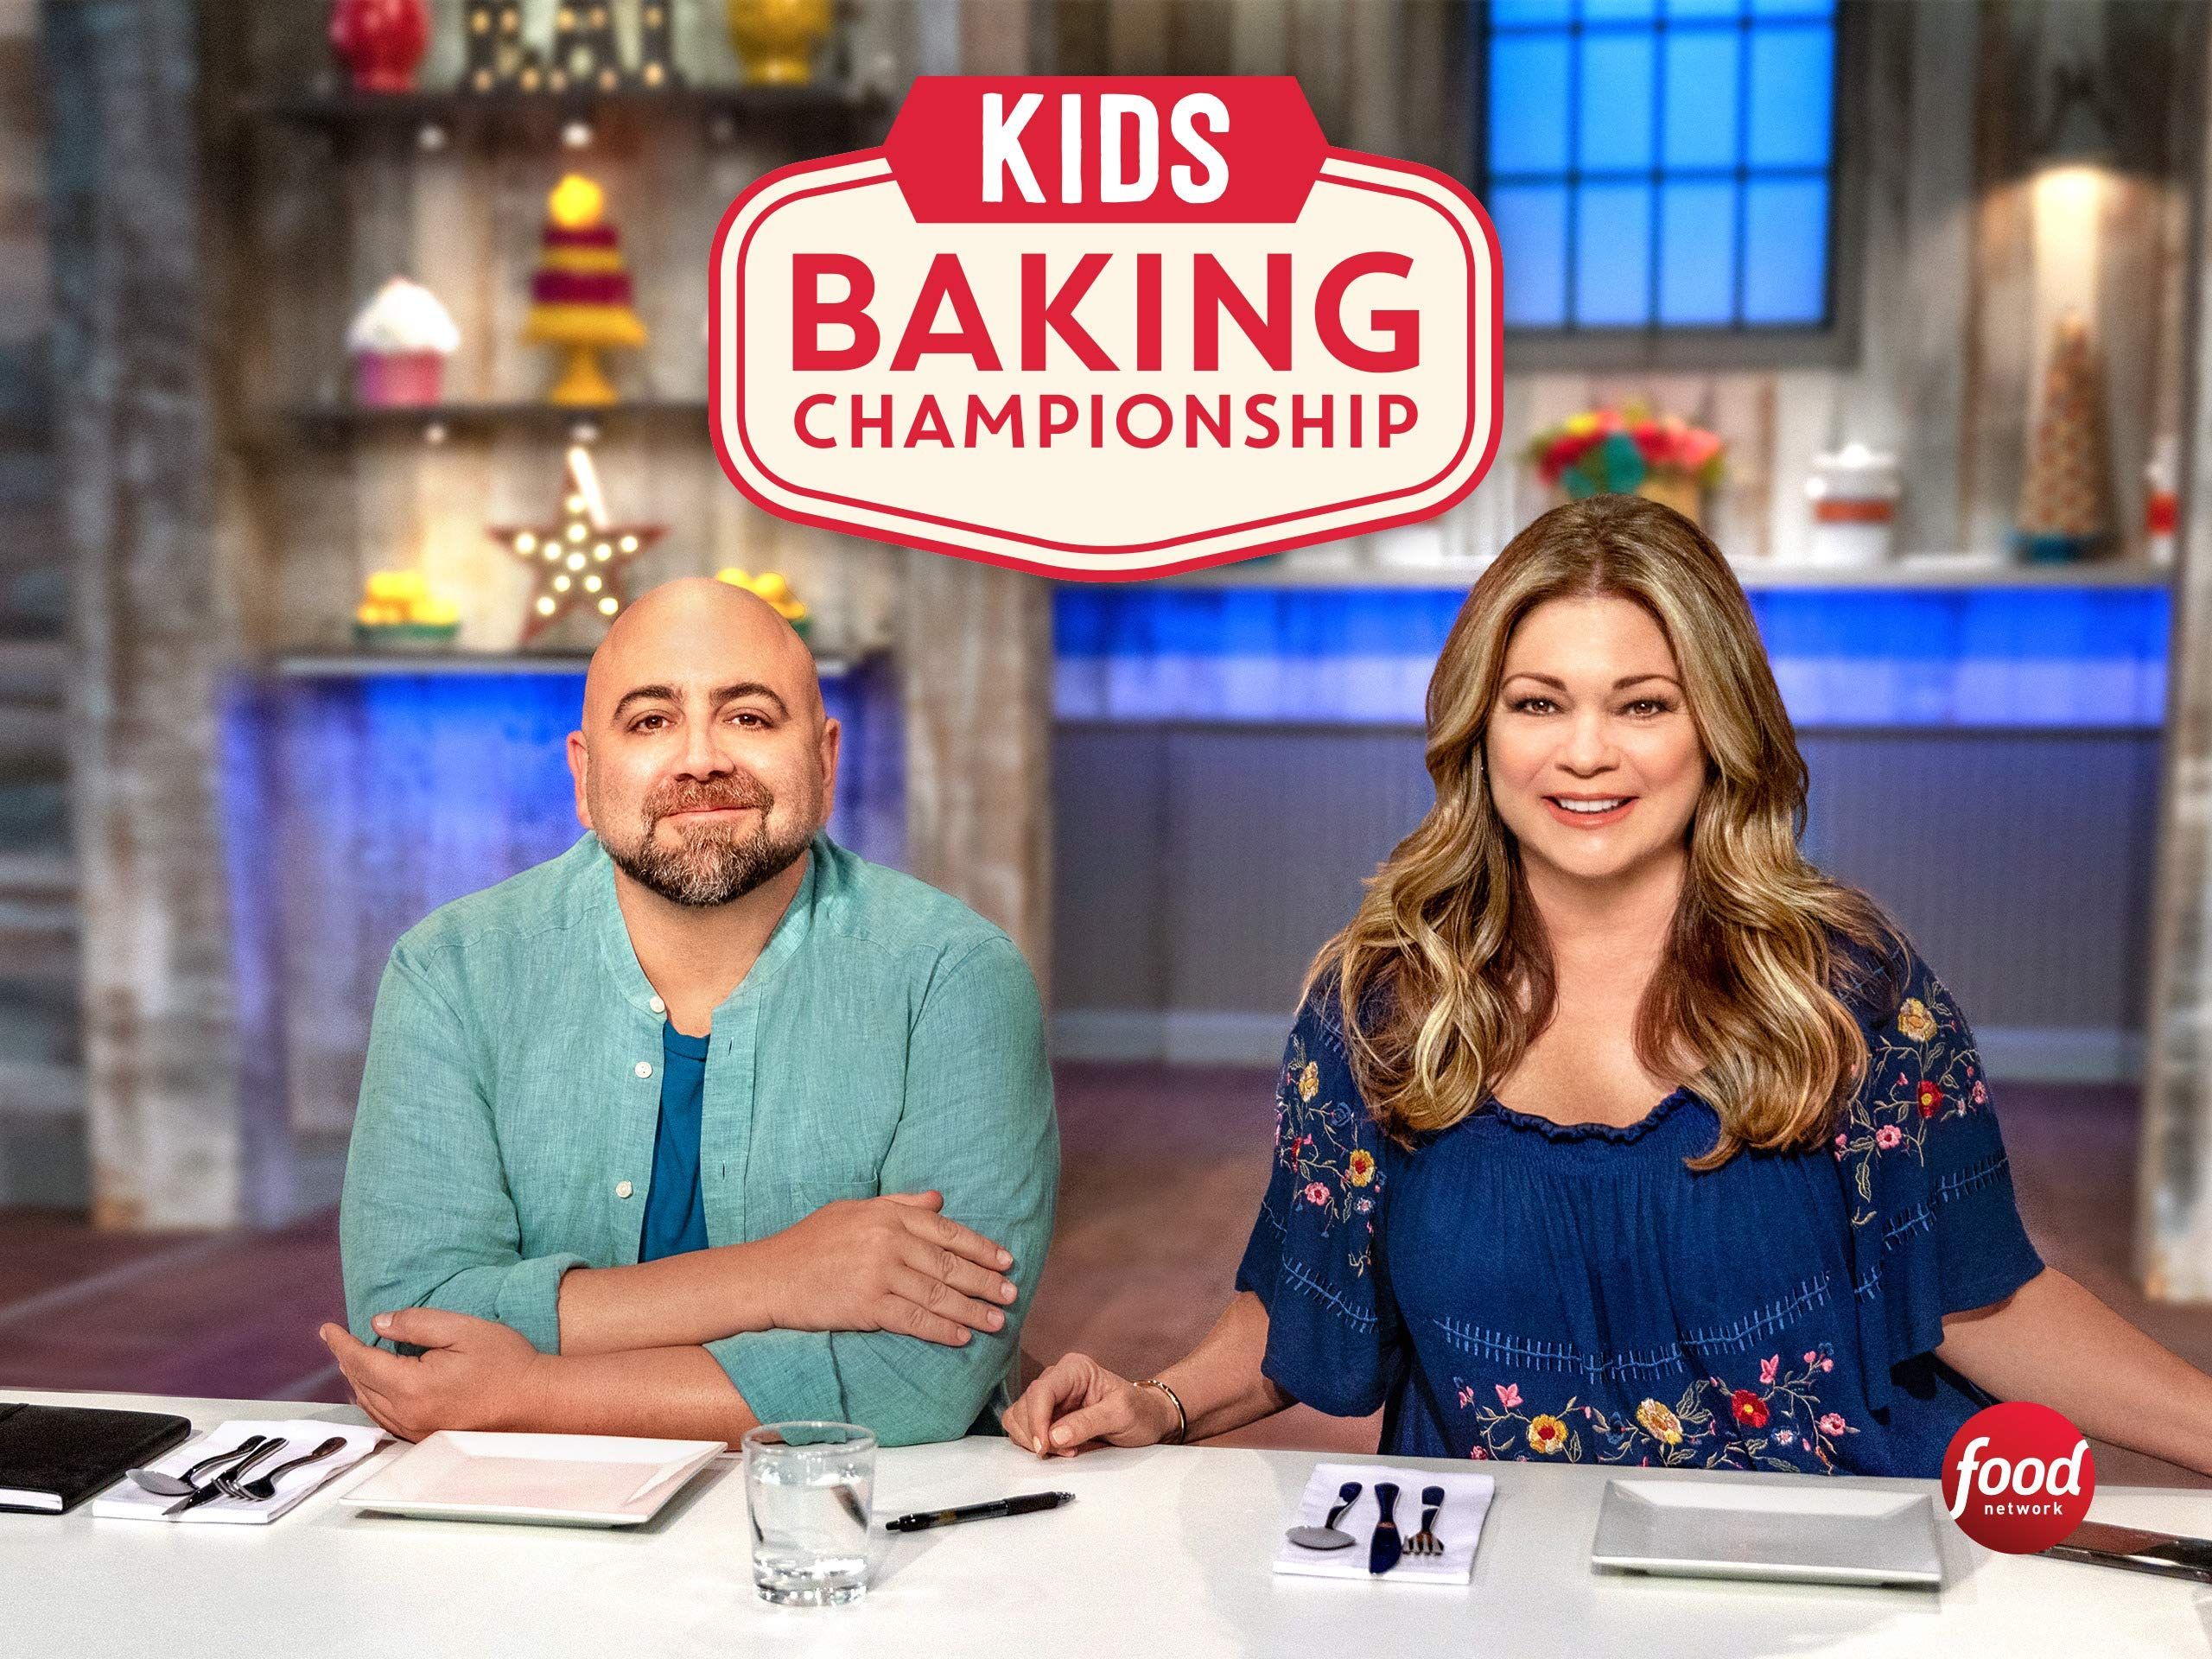 'Kids Baking Championship' on Amazon Prime